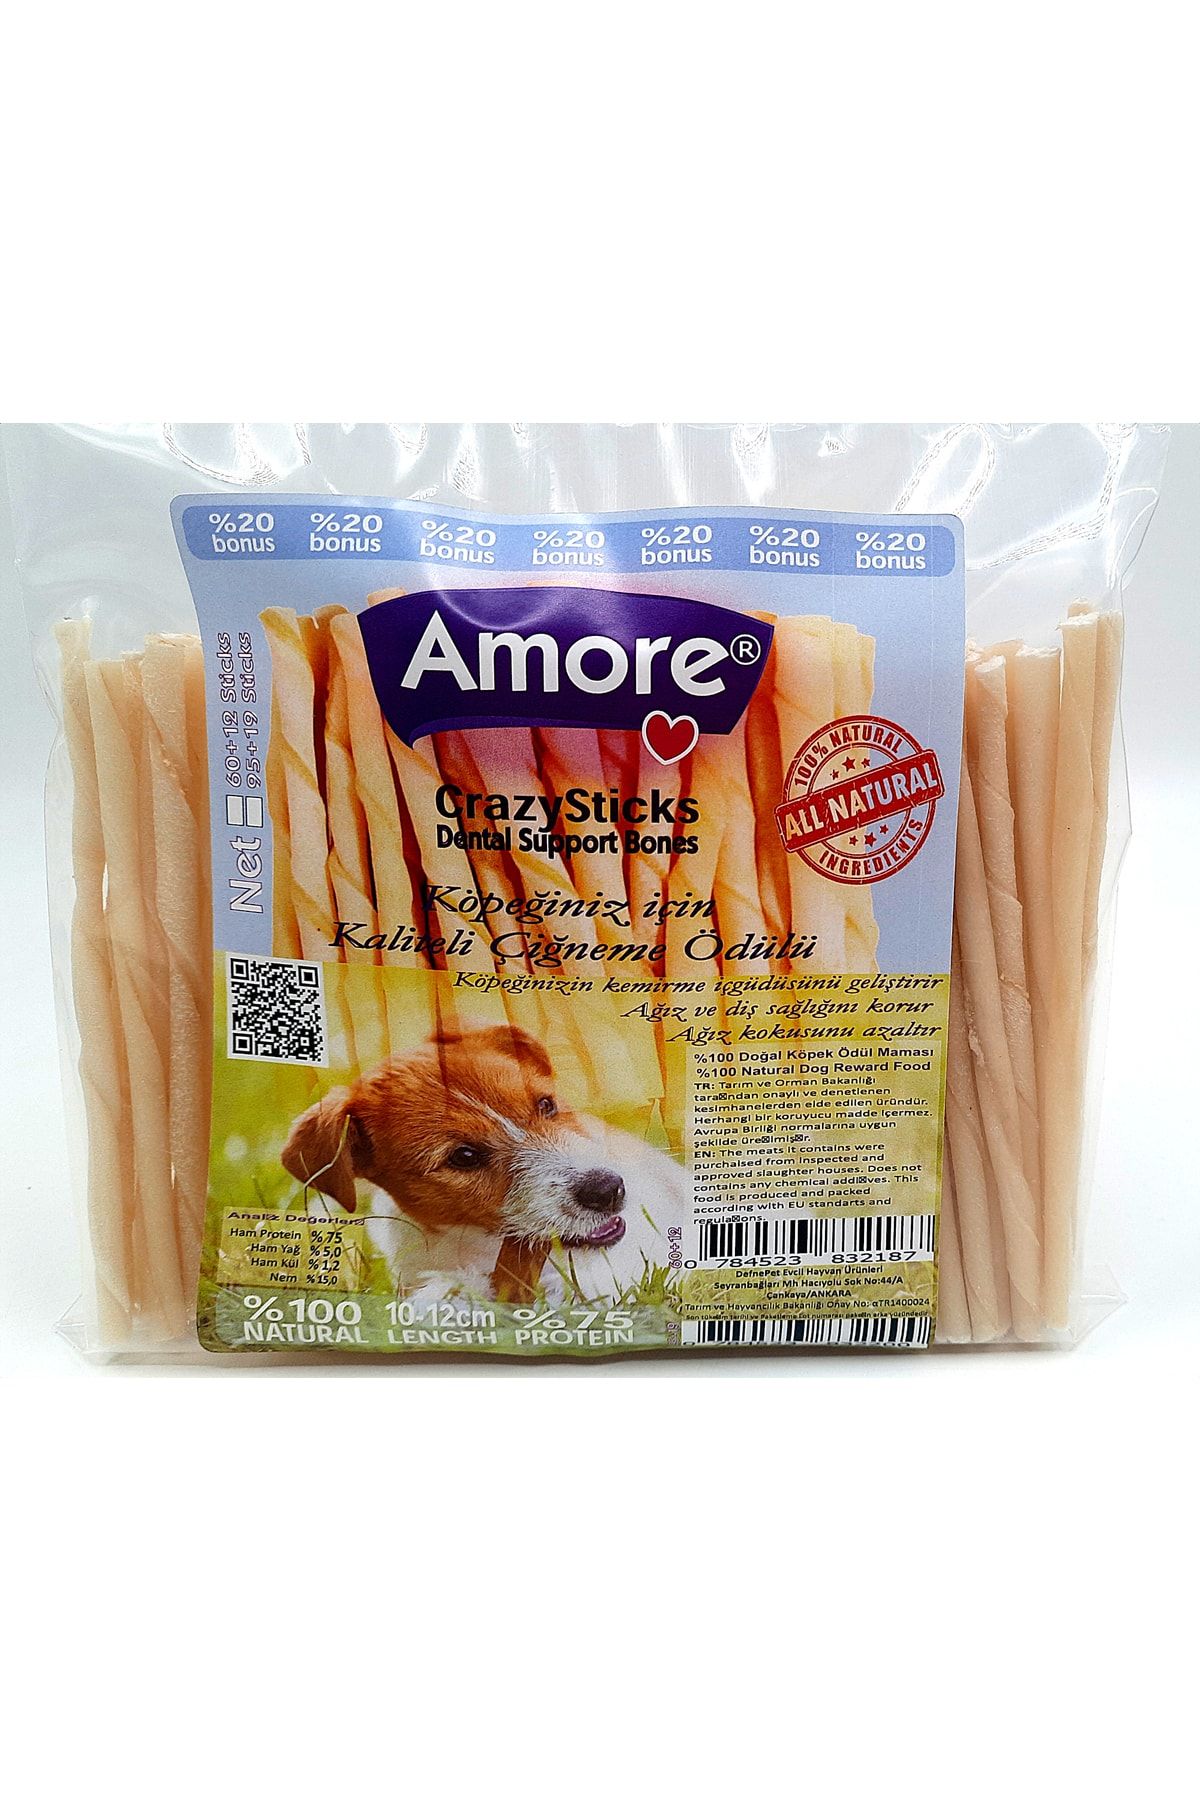 Amoredog Crazy Dog Sticks Kopek Cigneme Odul Cubuklari Natural 60+12 Adet Bonus Pack